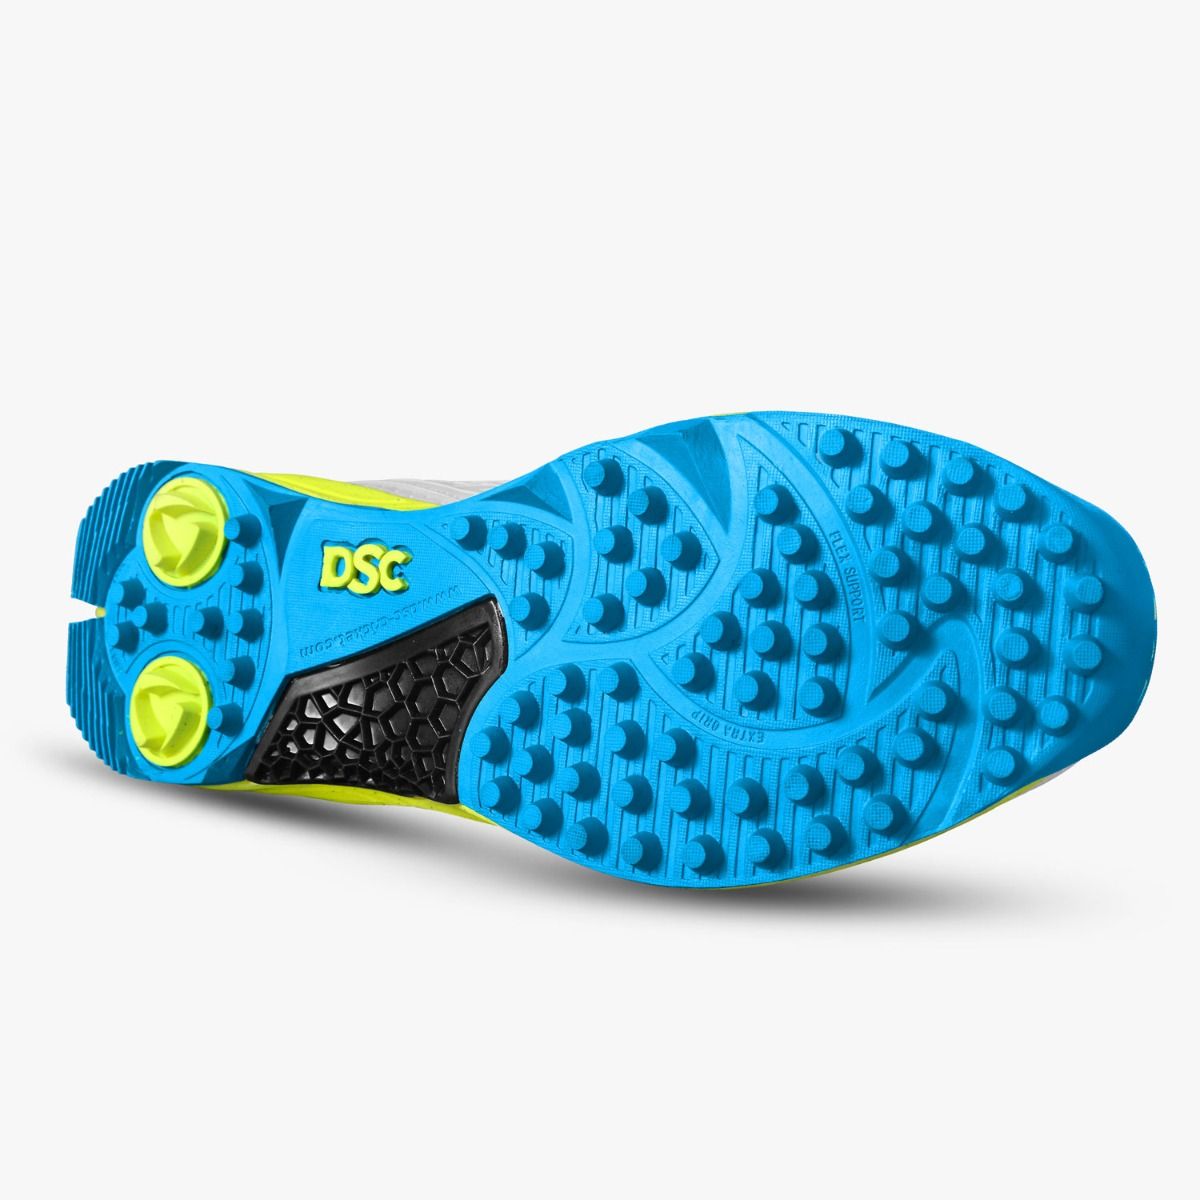 DSC Jaffa 22 Cricket Shoes (White/Blue/Yellow)